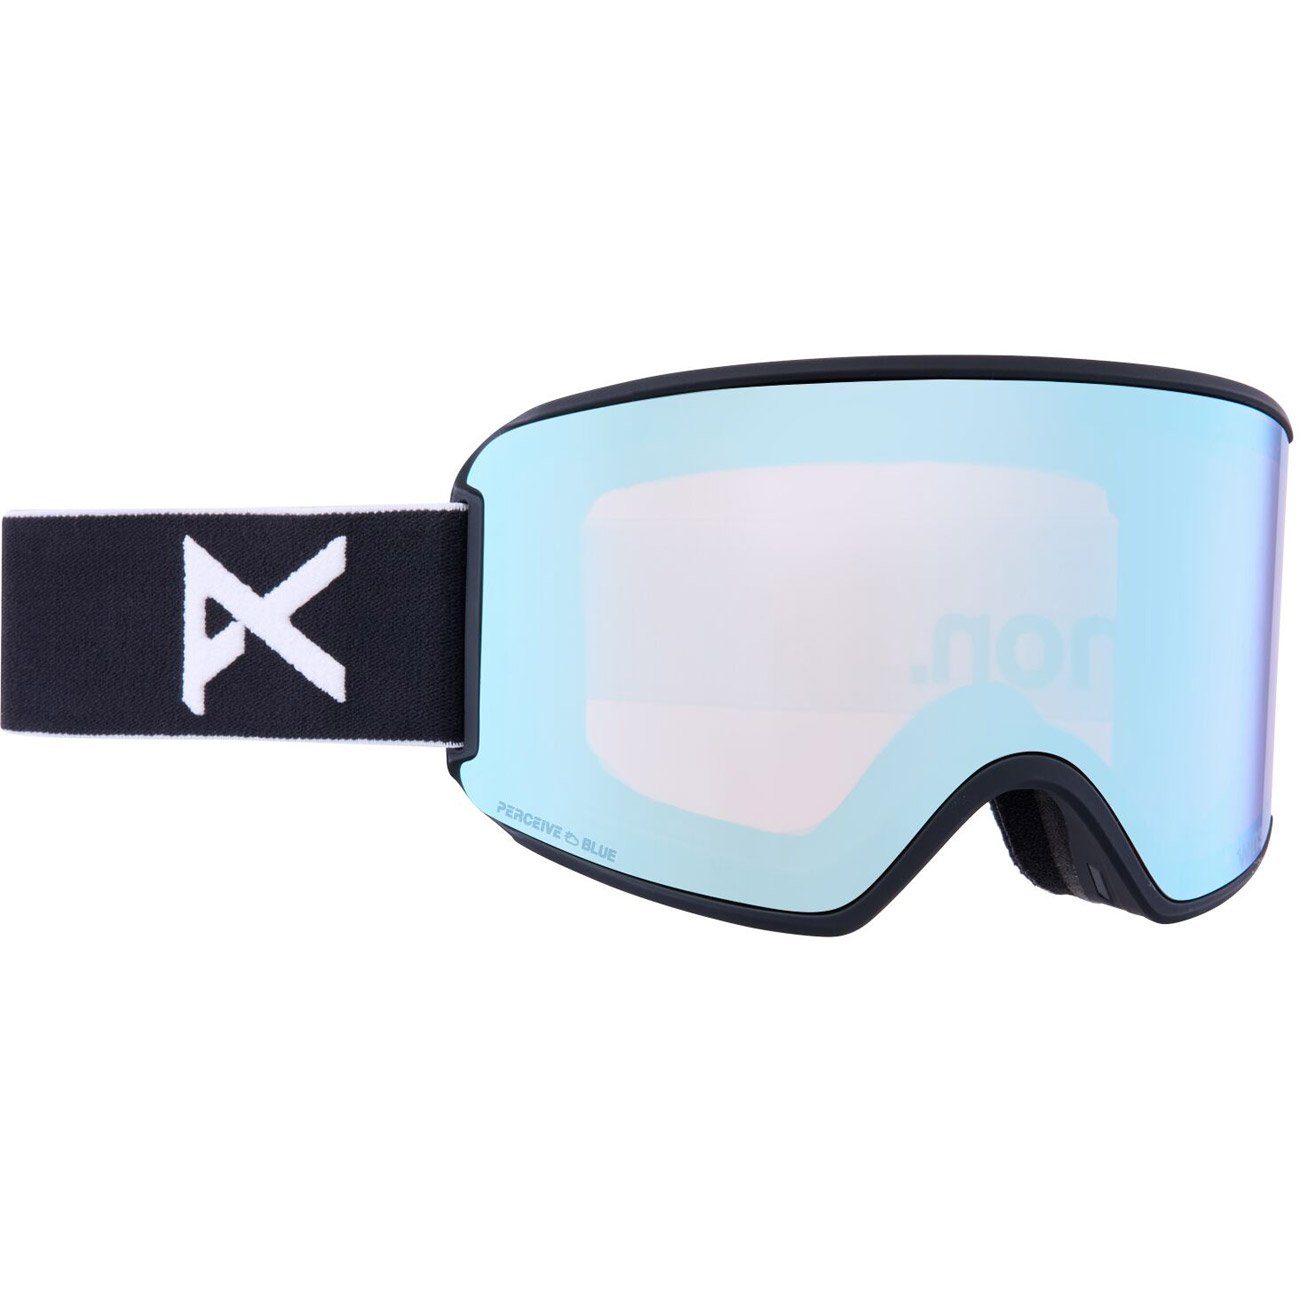 Anon Snowboardbrille, WM3 MFI + BONUS LINSE black/prcv vrbl blue